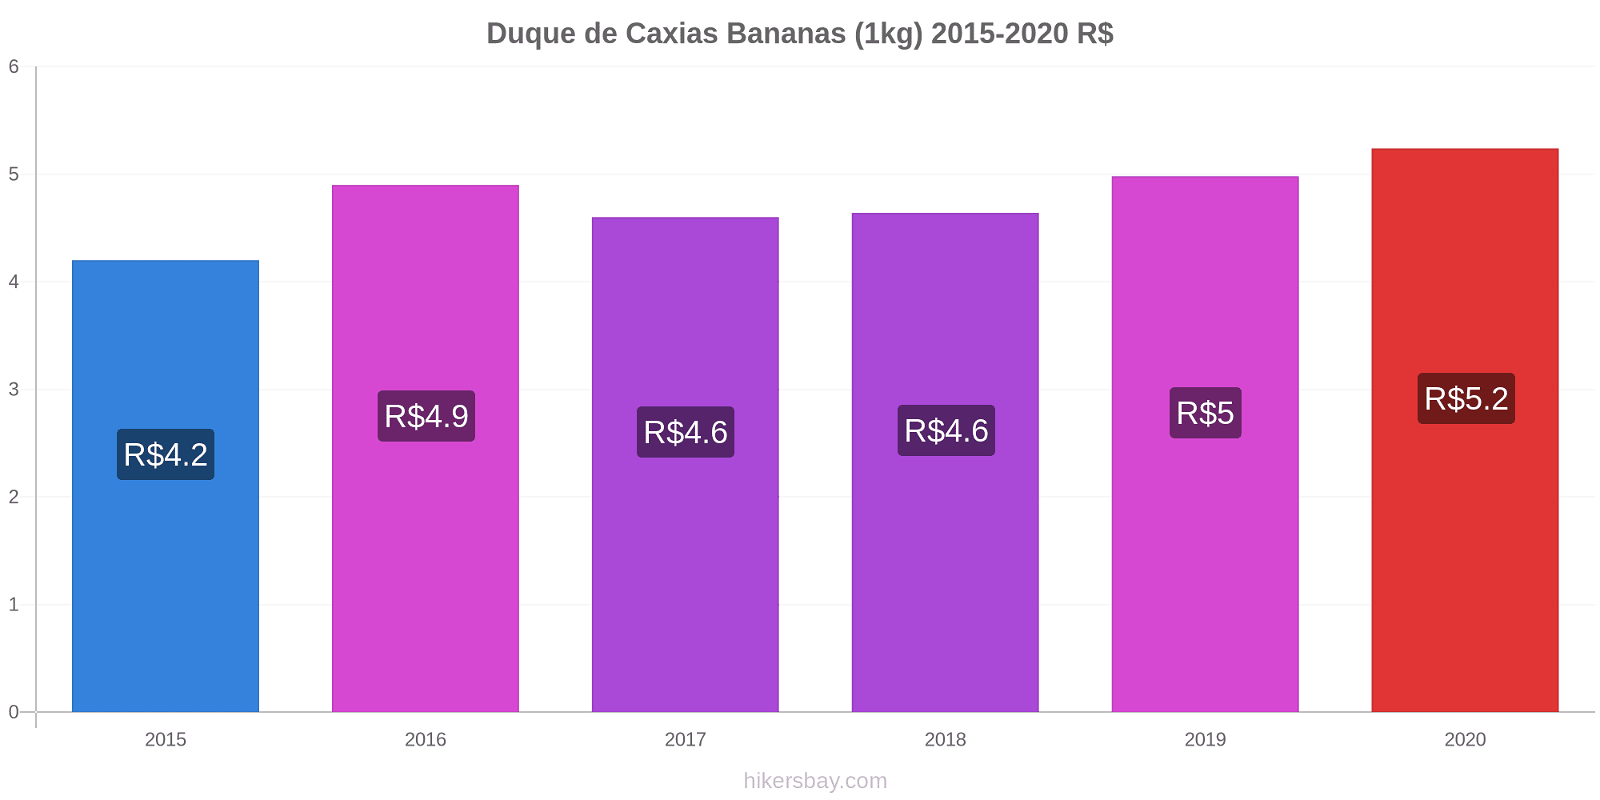 Duque de Caxias price changes Bananas (1kg) hikersbay.com